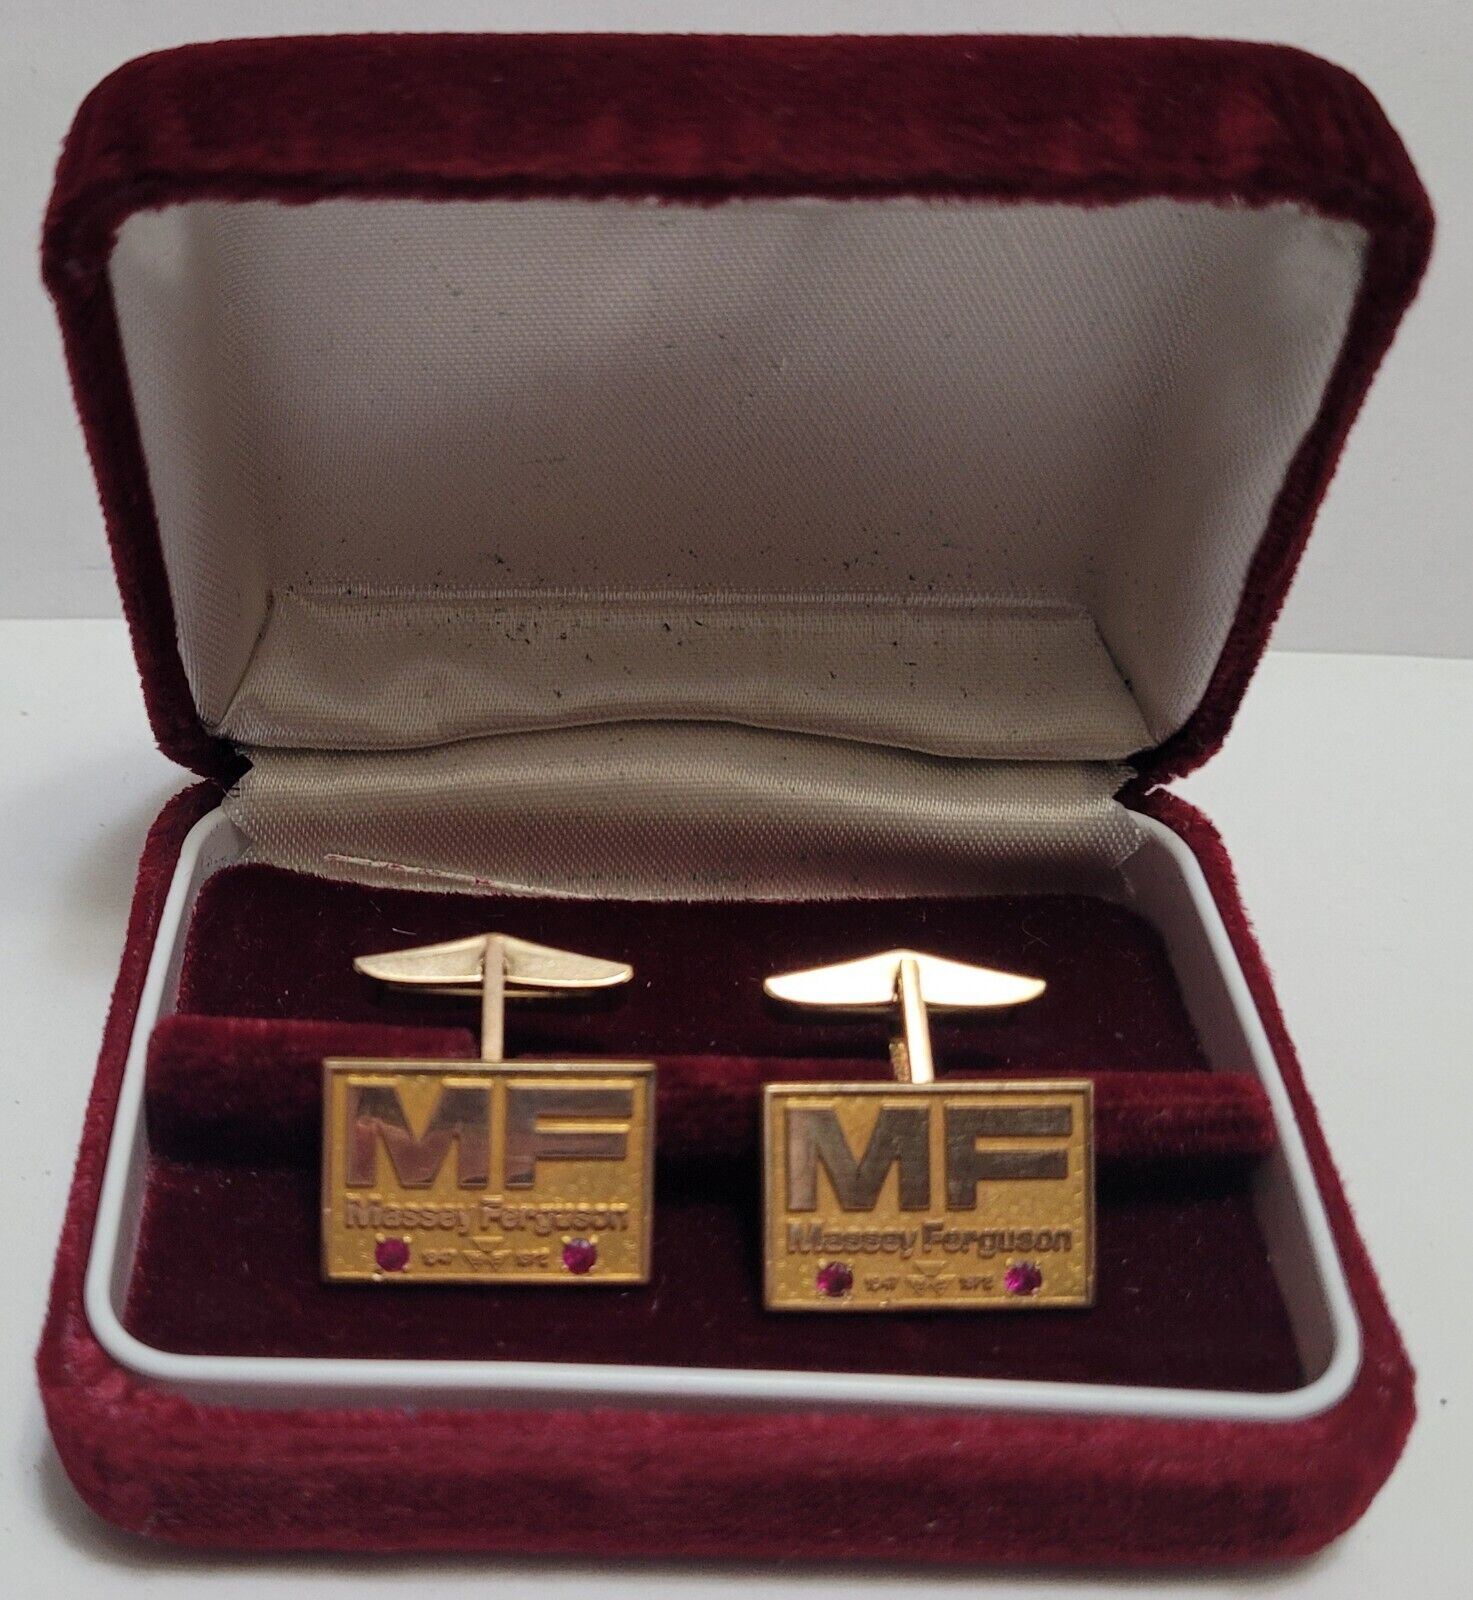 VINTAGE 1972 MASSEY FERGUSON 1/10 10K GOLD FILLED CUFFLINKS W/CASE